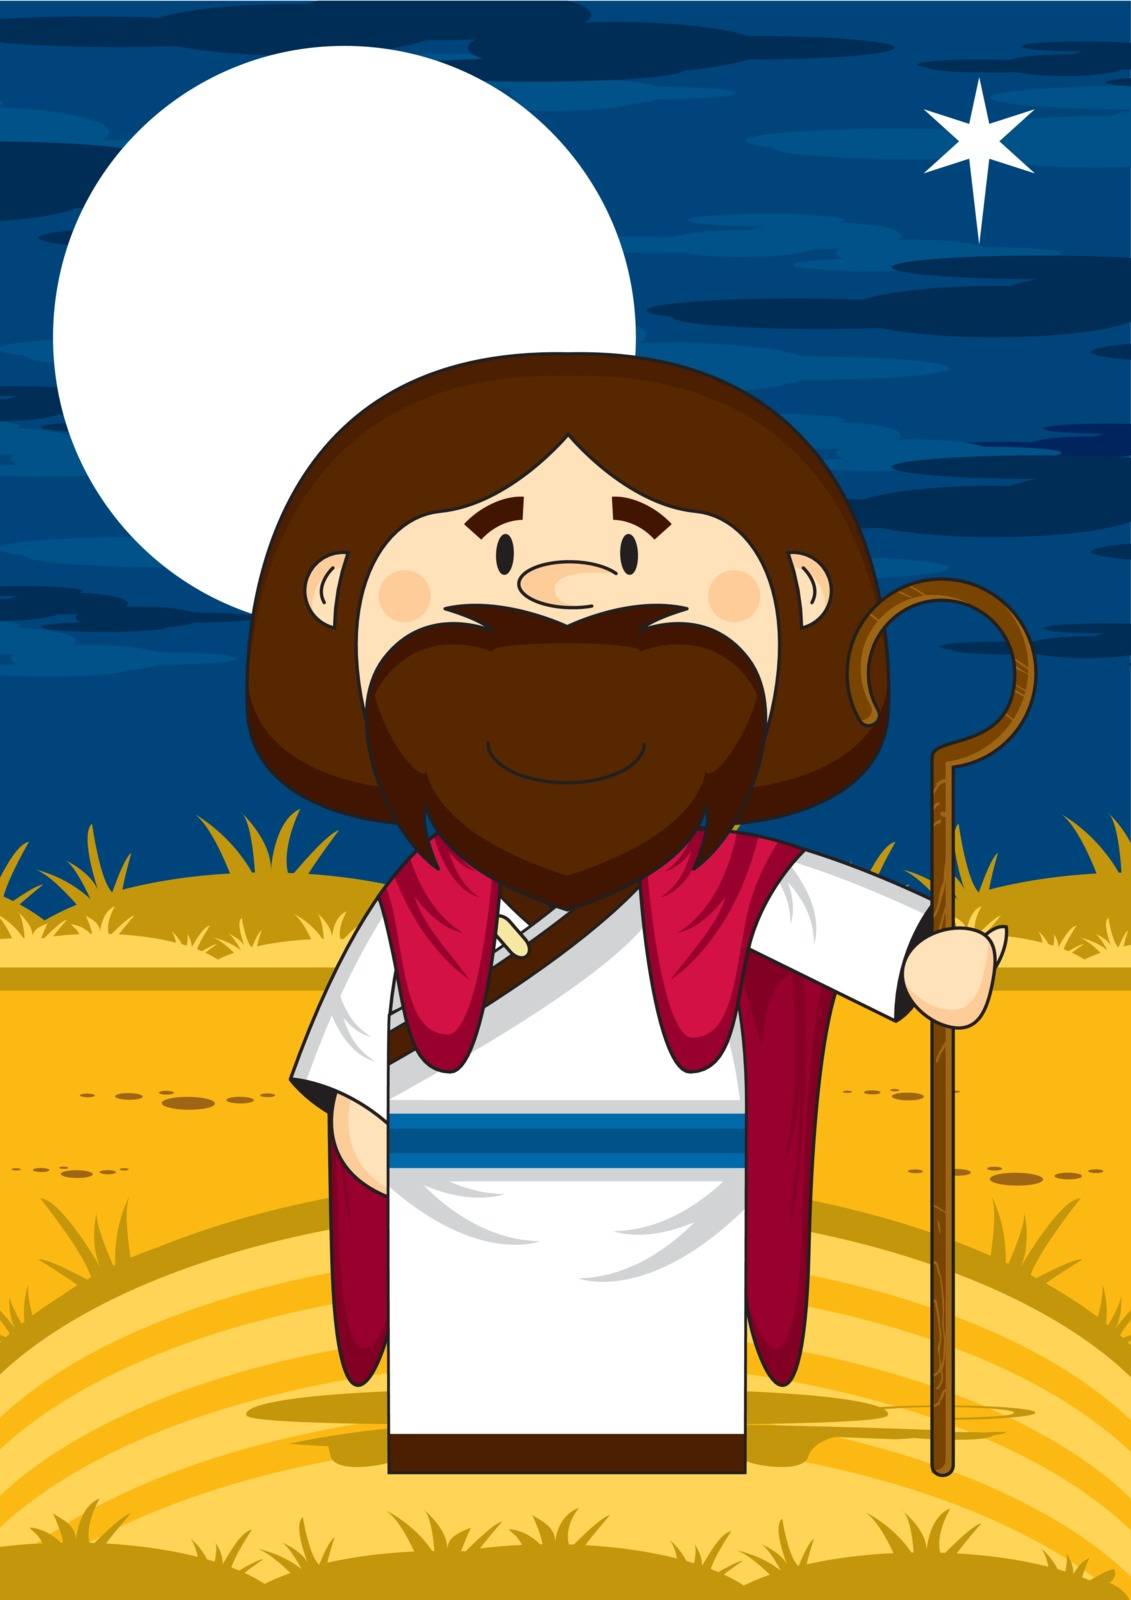 Cartoon Jesus Christ Scene by markmurphycreative